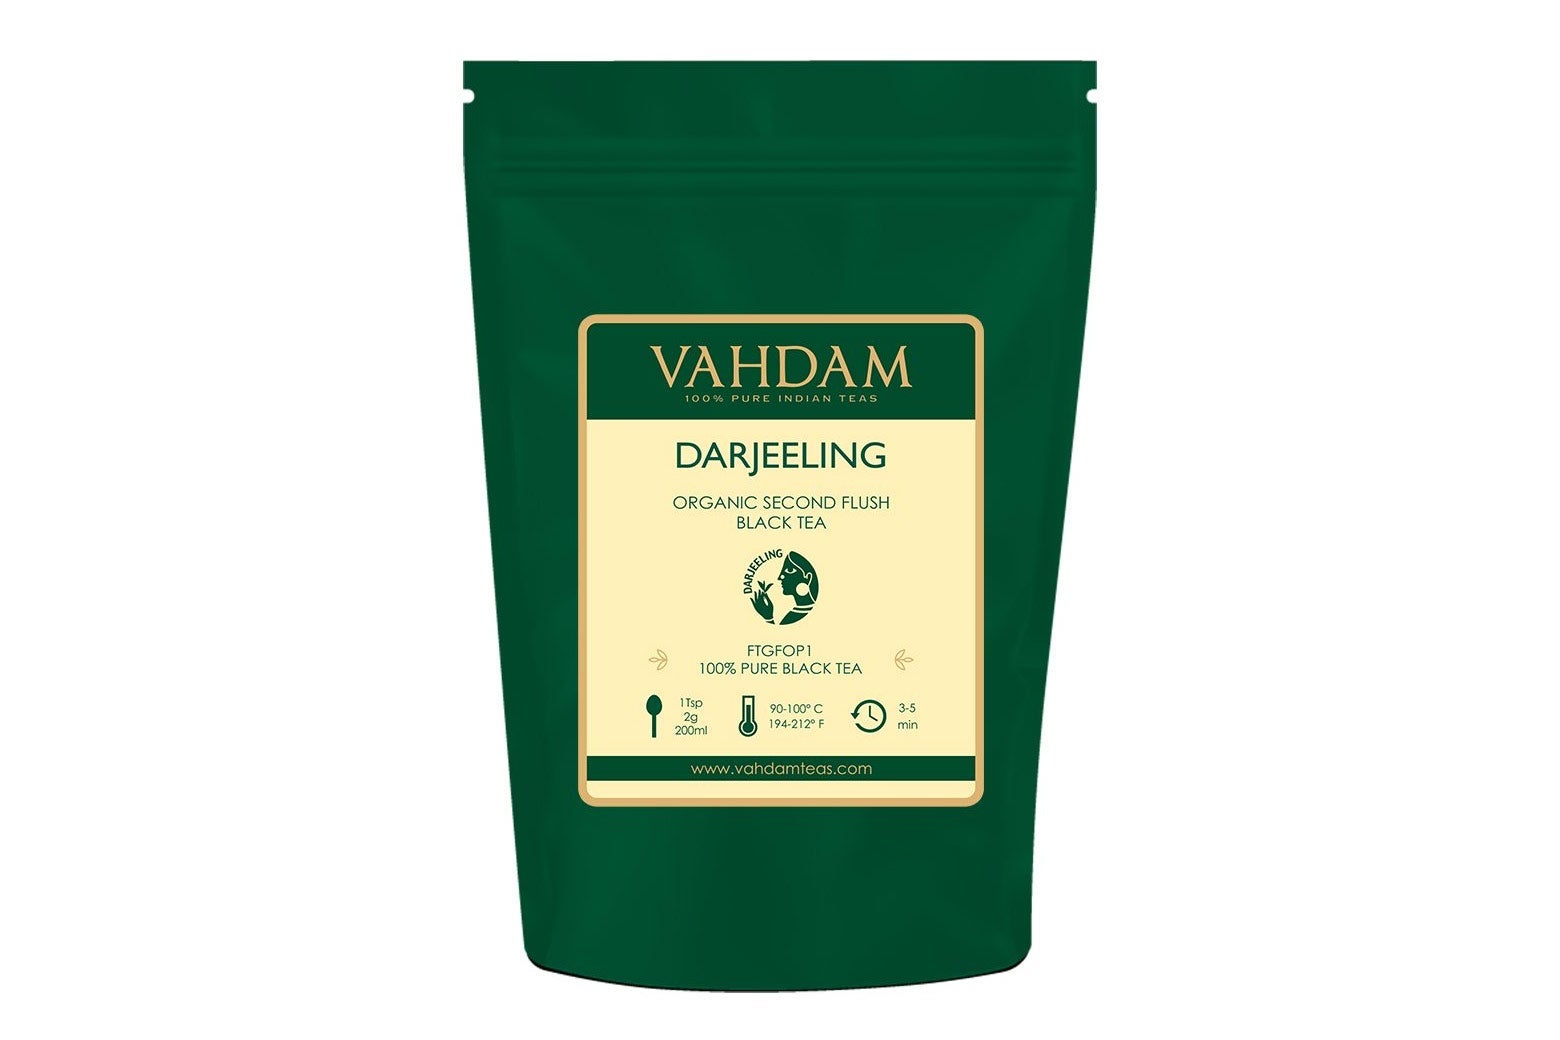 Vadham Darjeeling tea